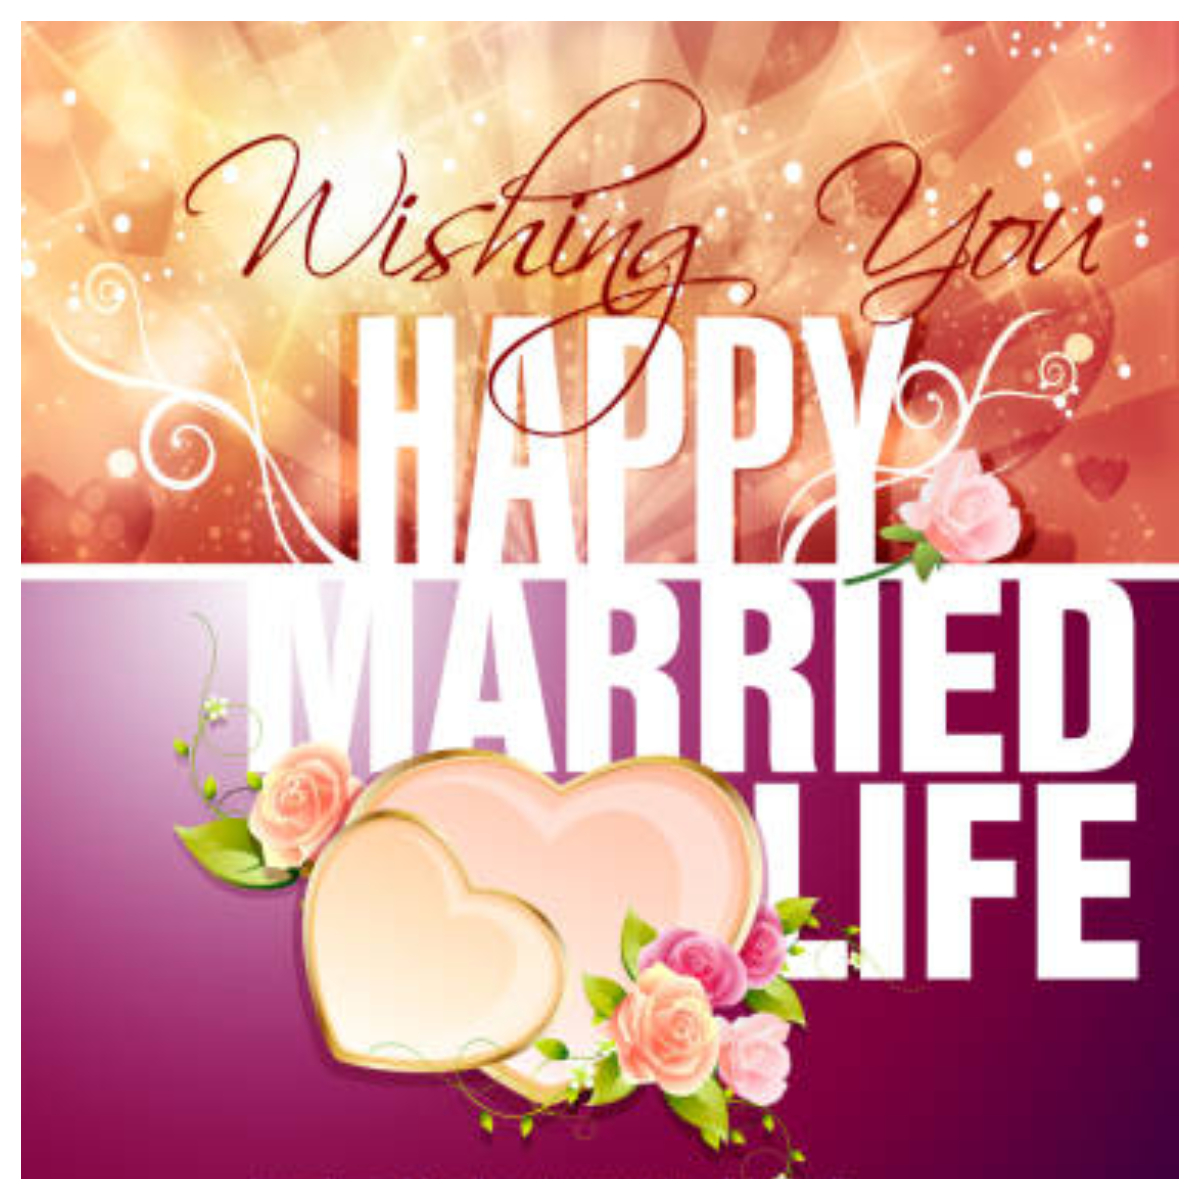 65 Best wedding wishes to write on the wedding card | PINKVILLA